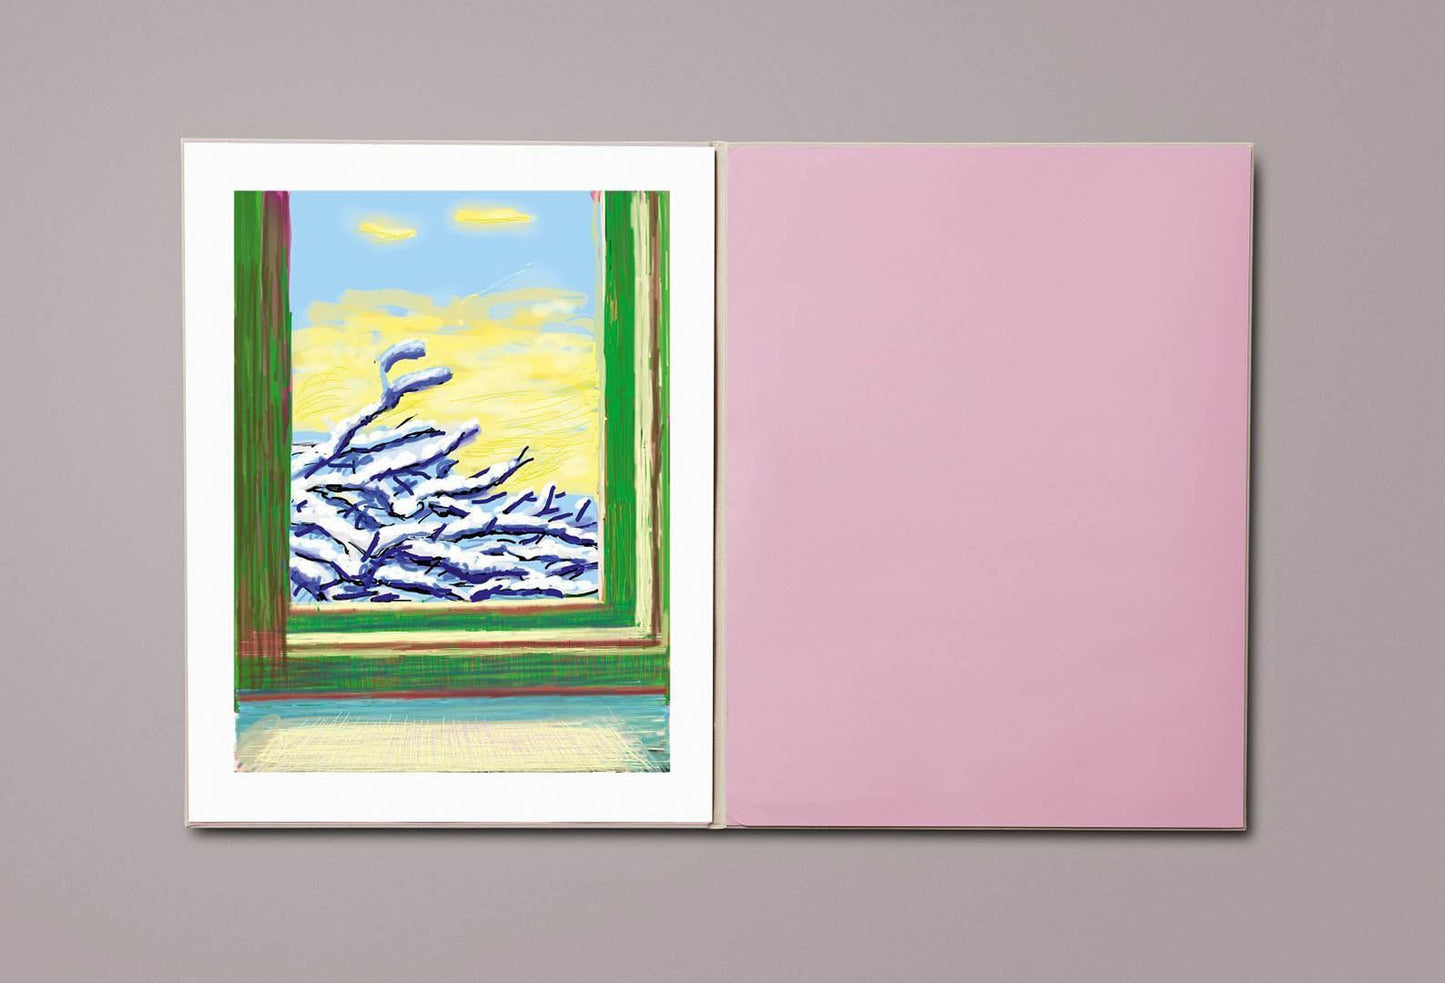 My Window, Art Edition C (No. 501–750), ‘Untitled No. 610’, 23rd December 2010